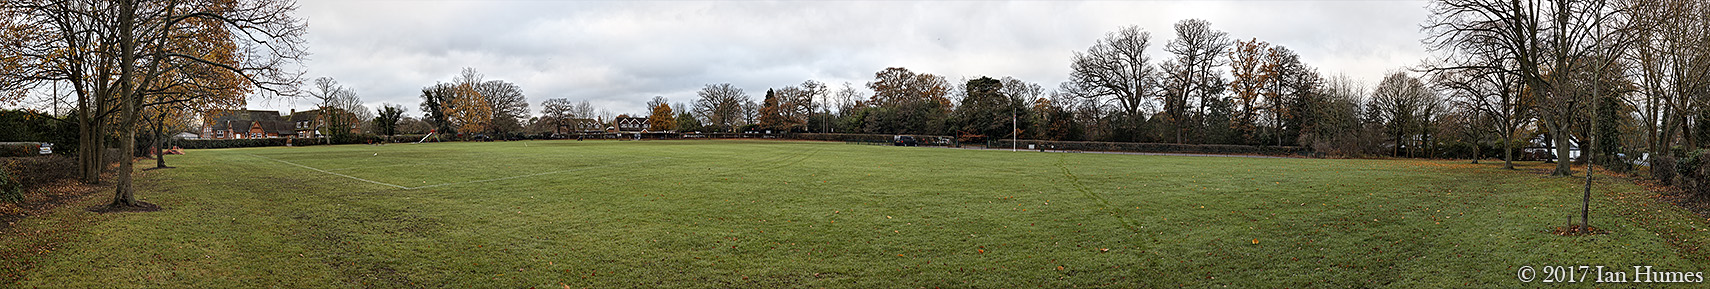 King George V Playing Field - Berkshire